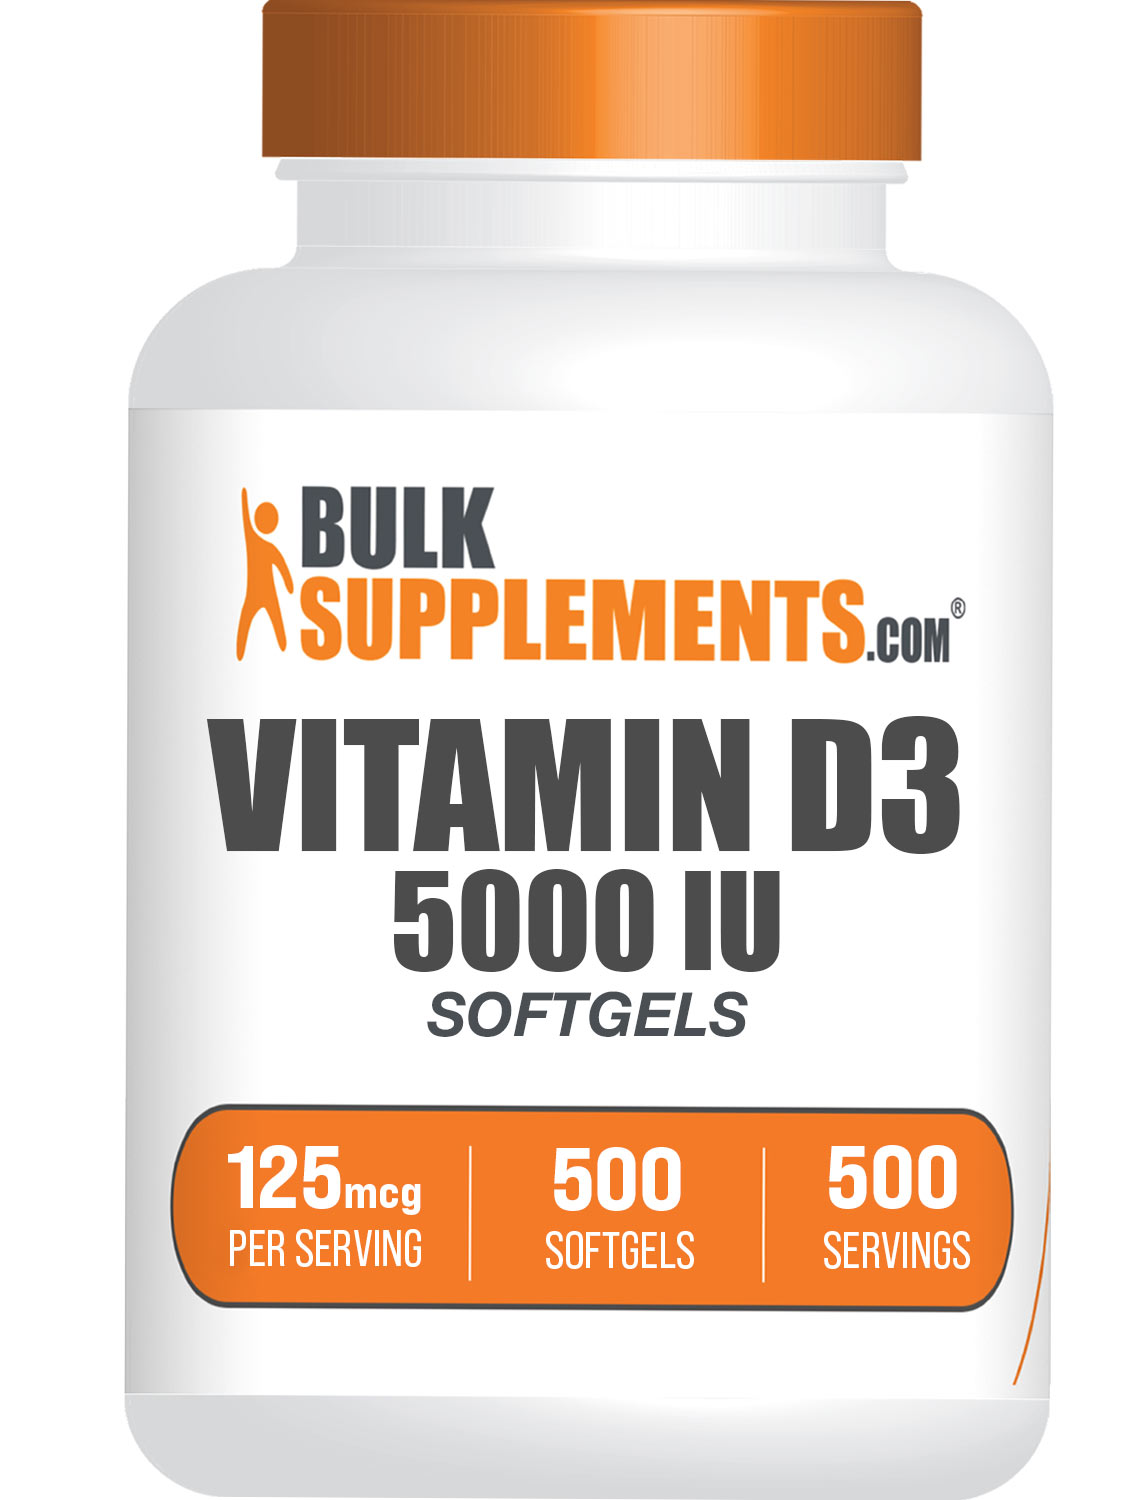 BulkSupplements.com Vitamin D3 5000 IU 500 ct bottle image